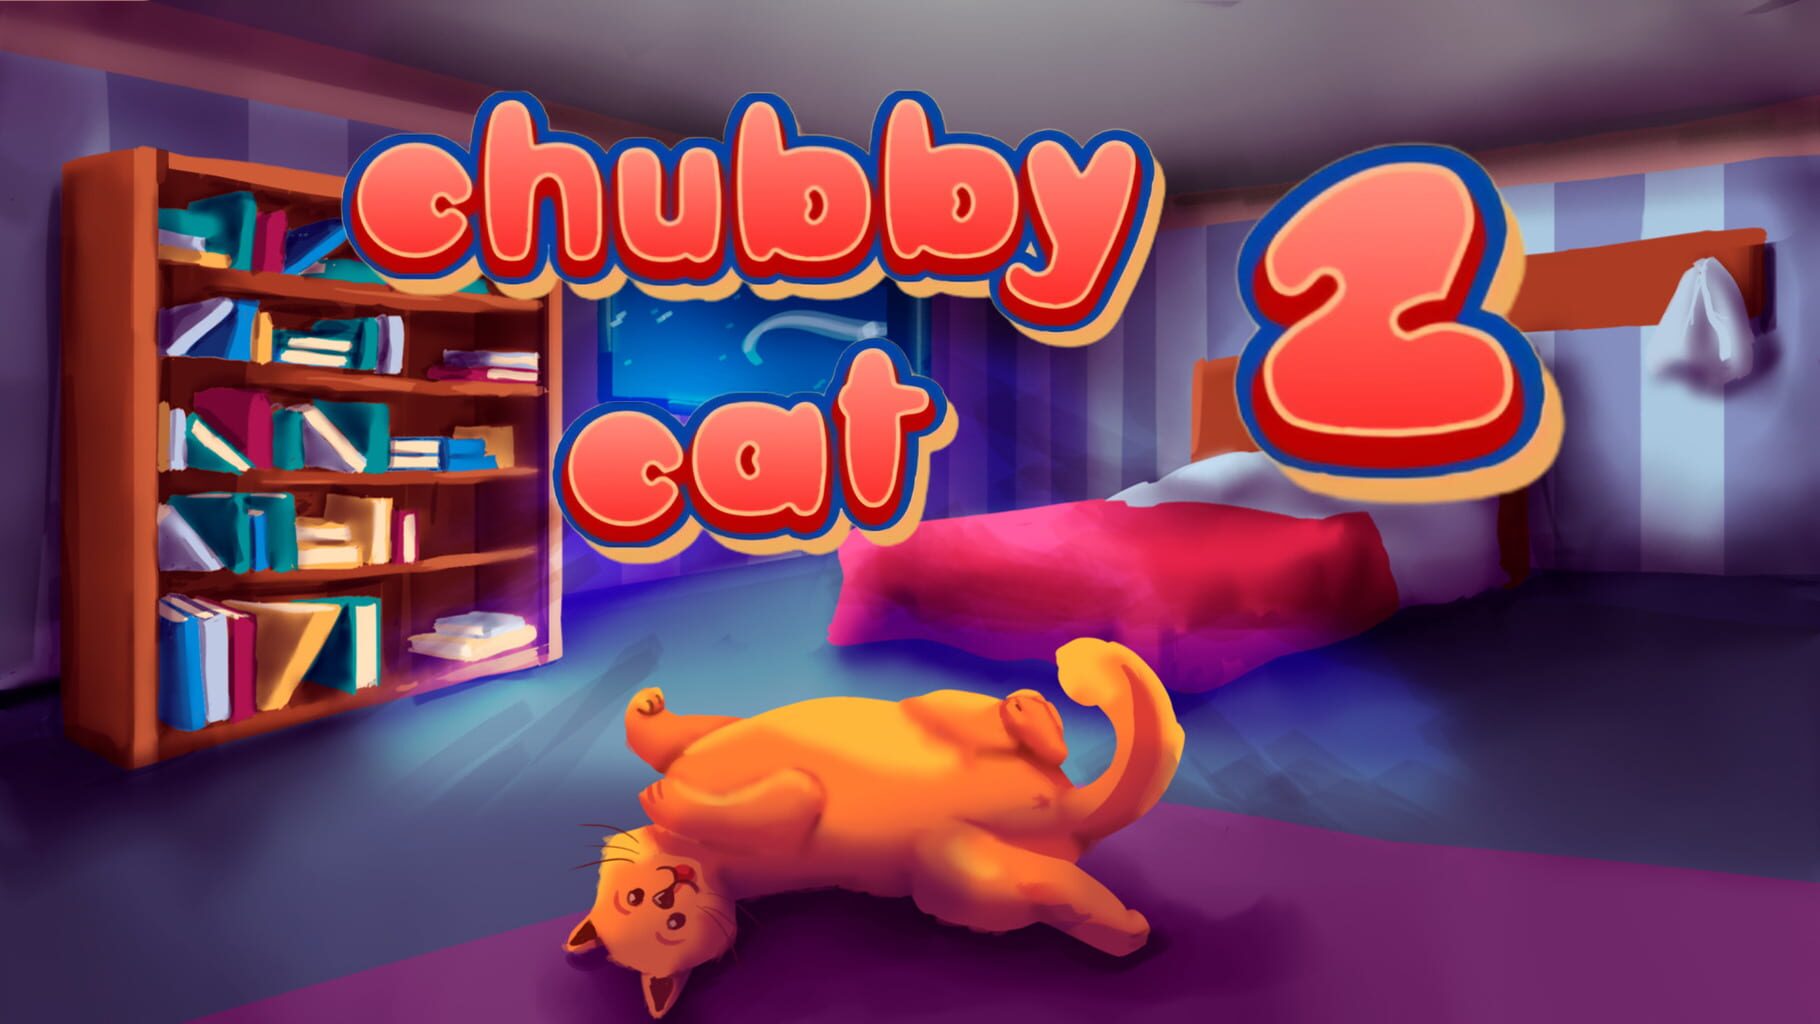 Chubby Cat 2 artwork